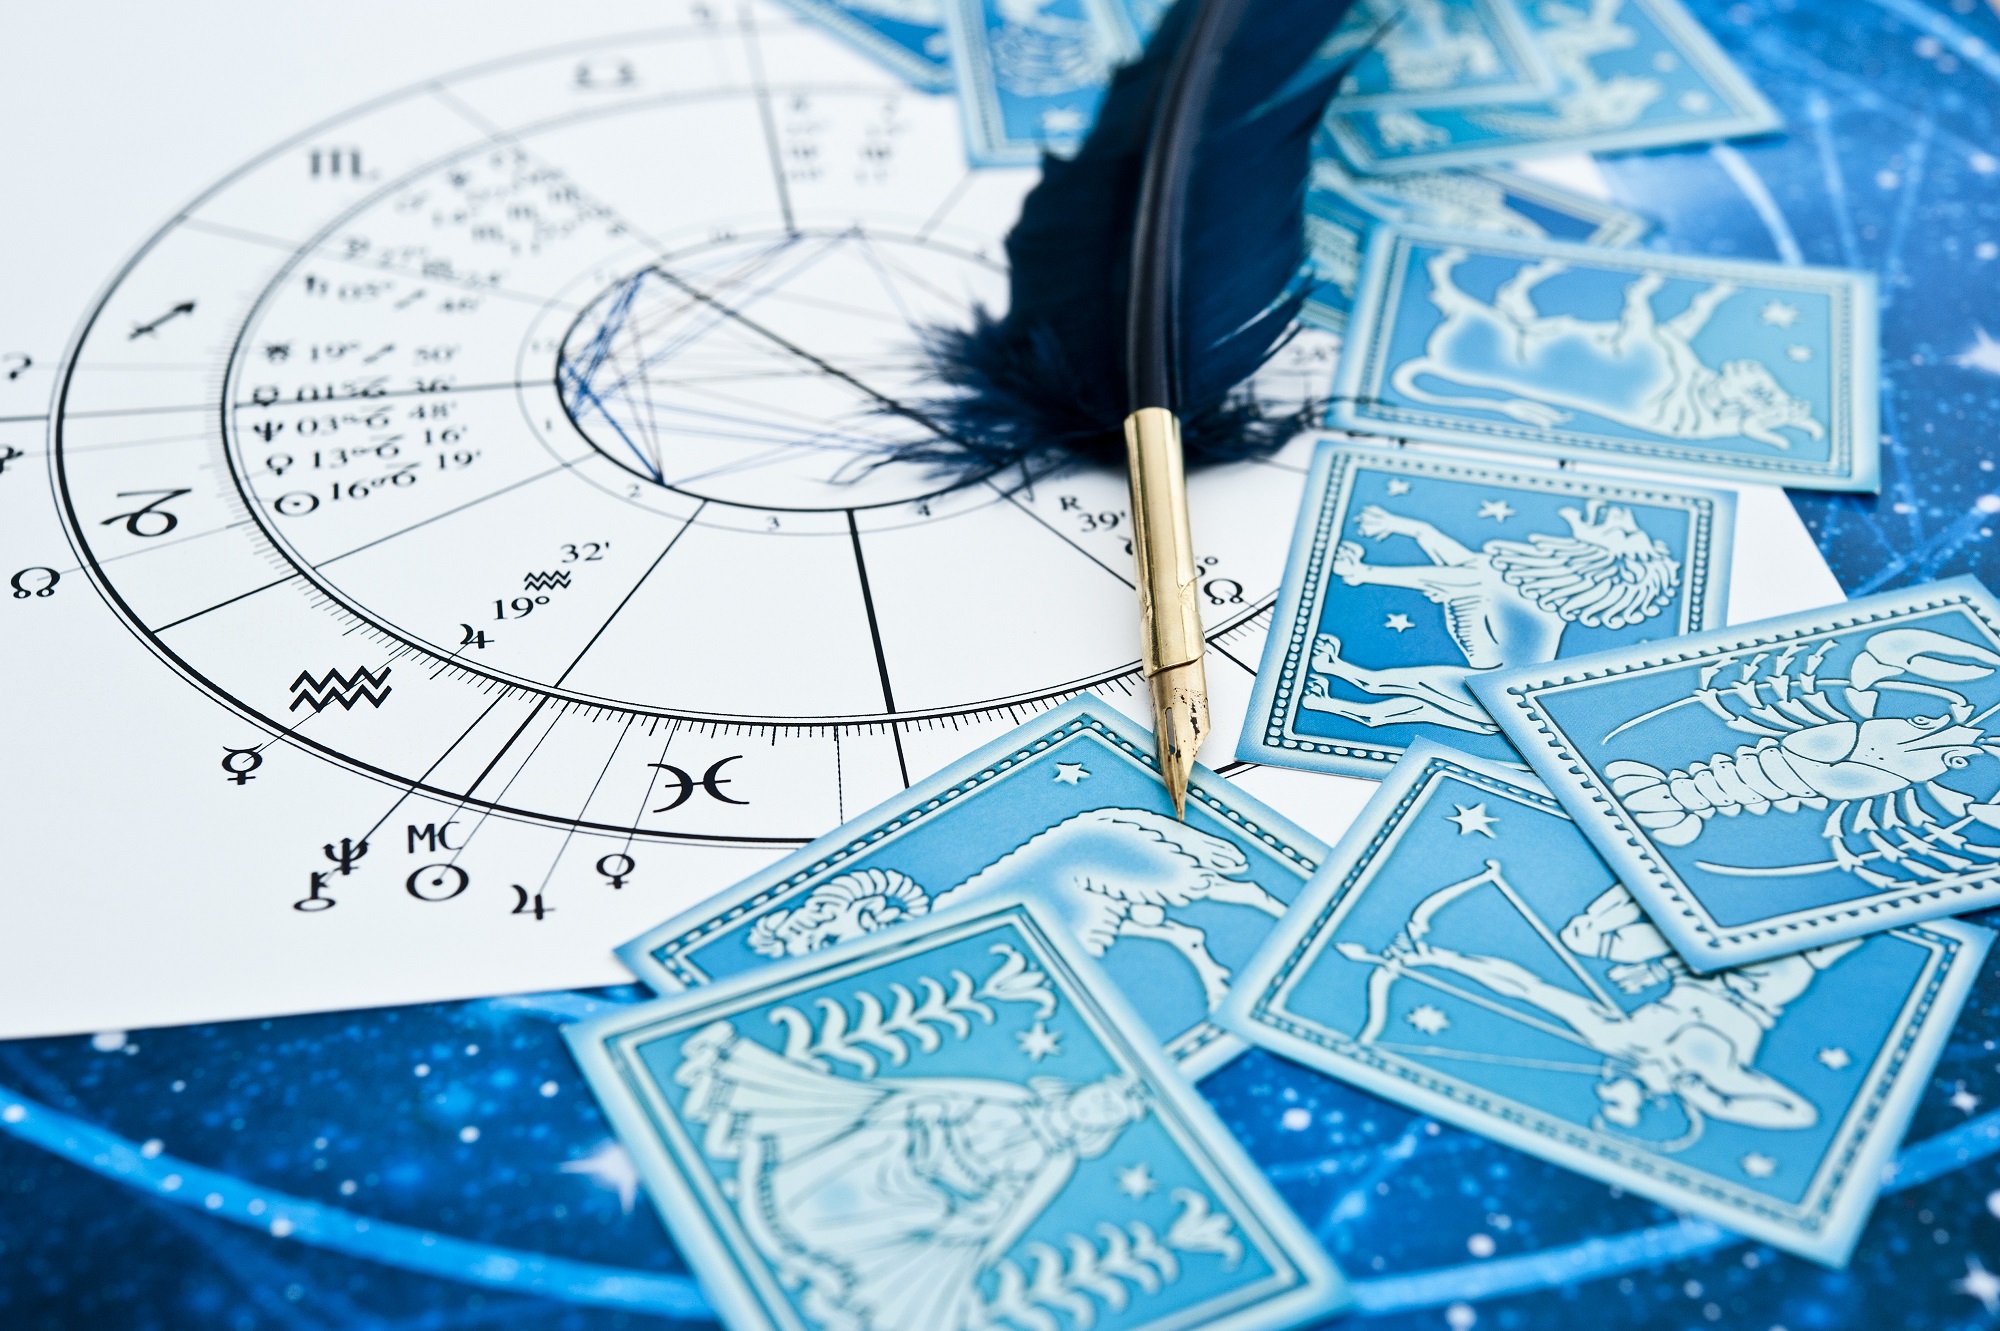 2020 astrology